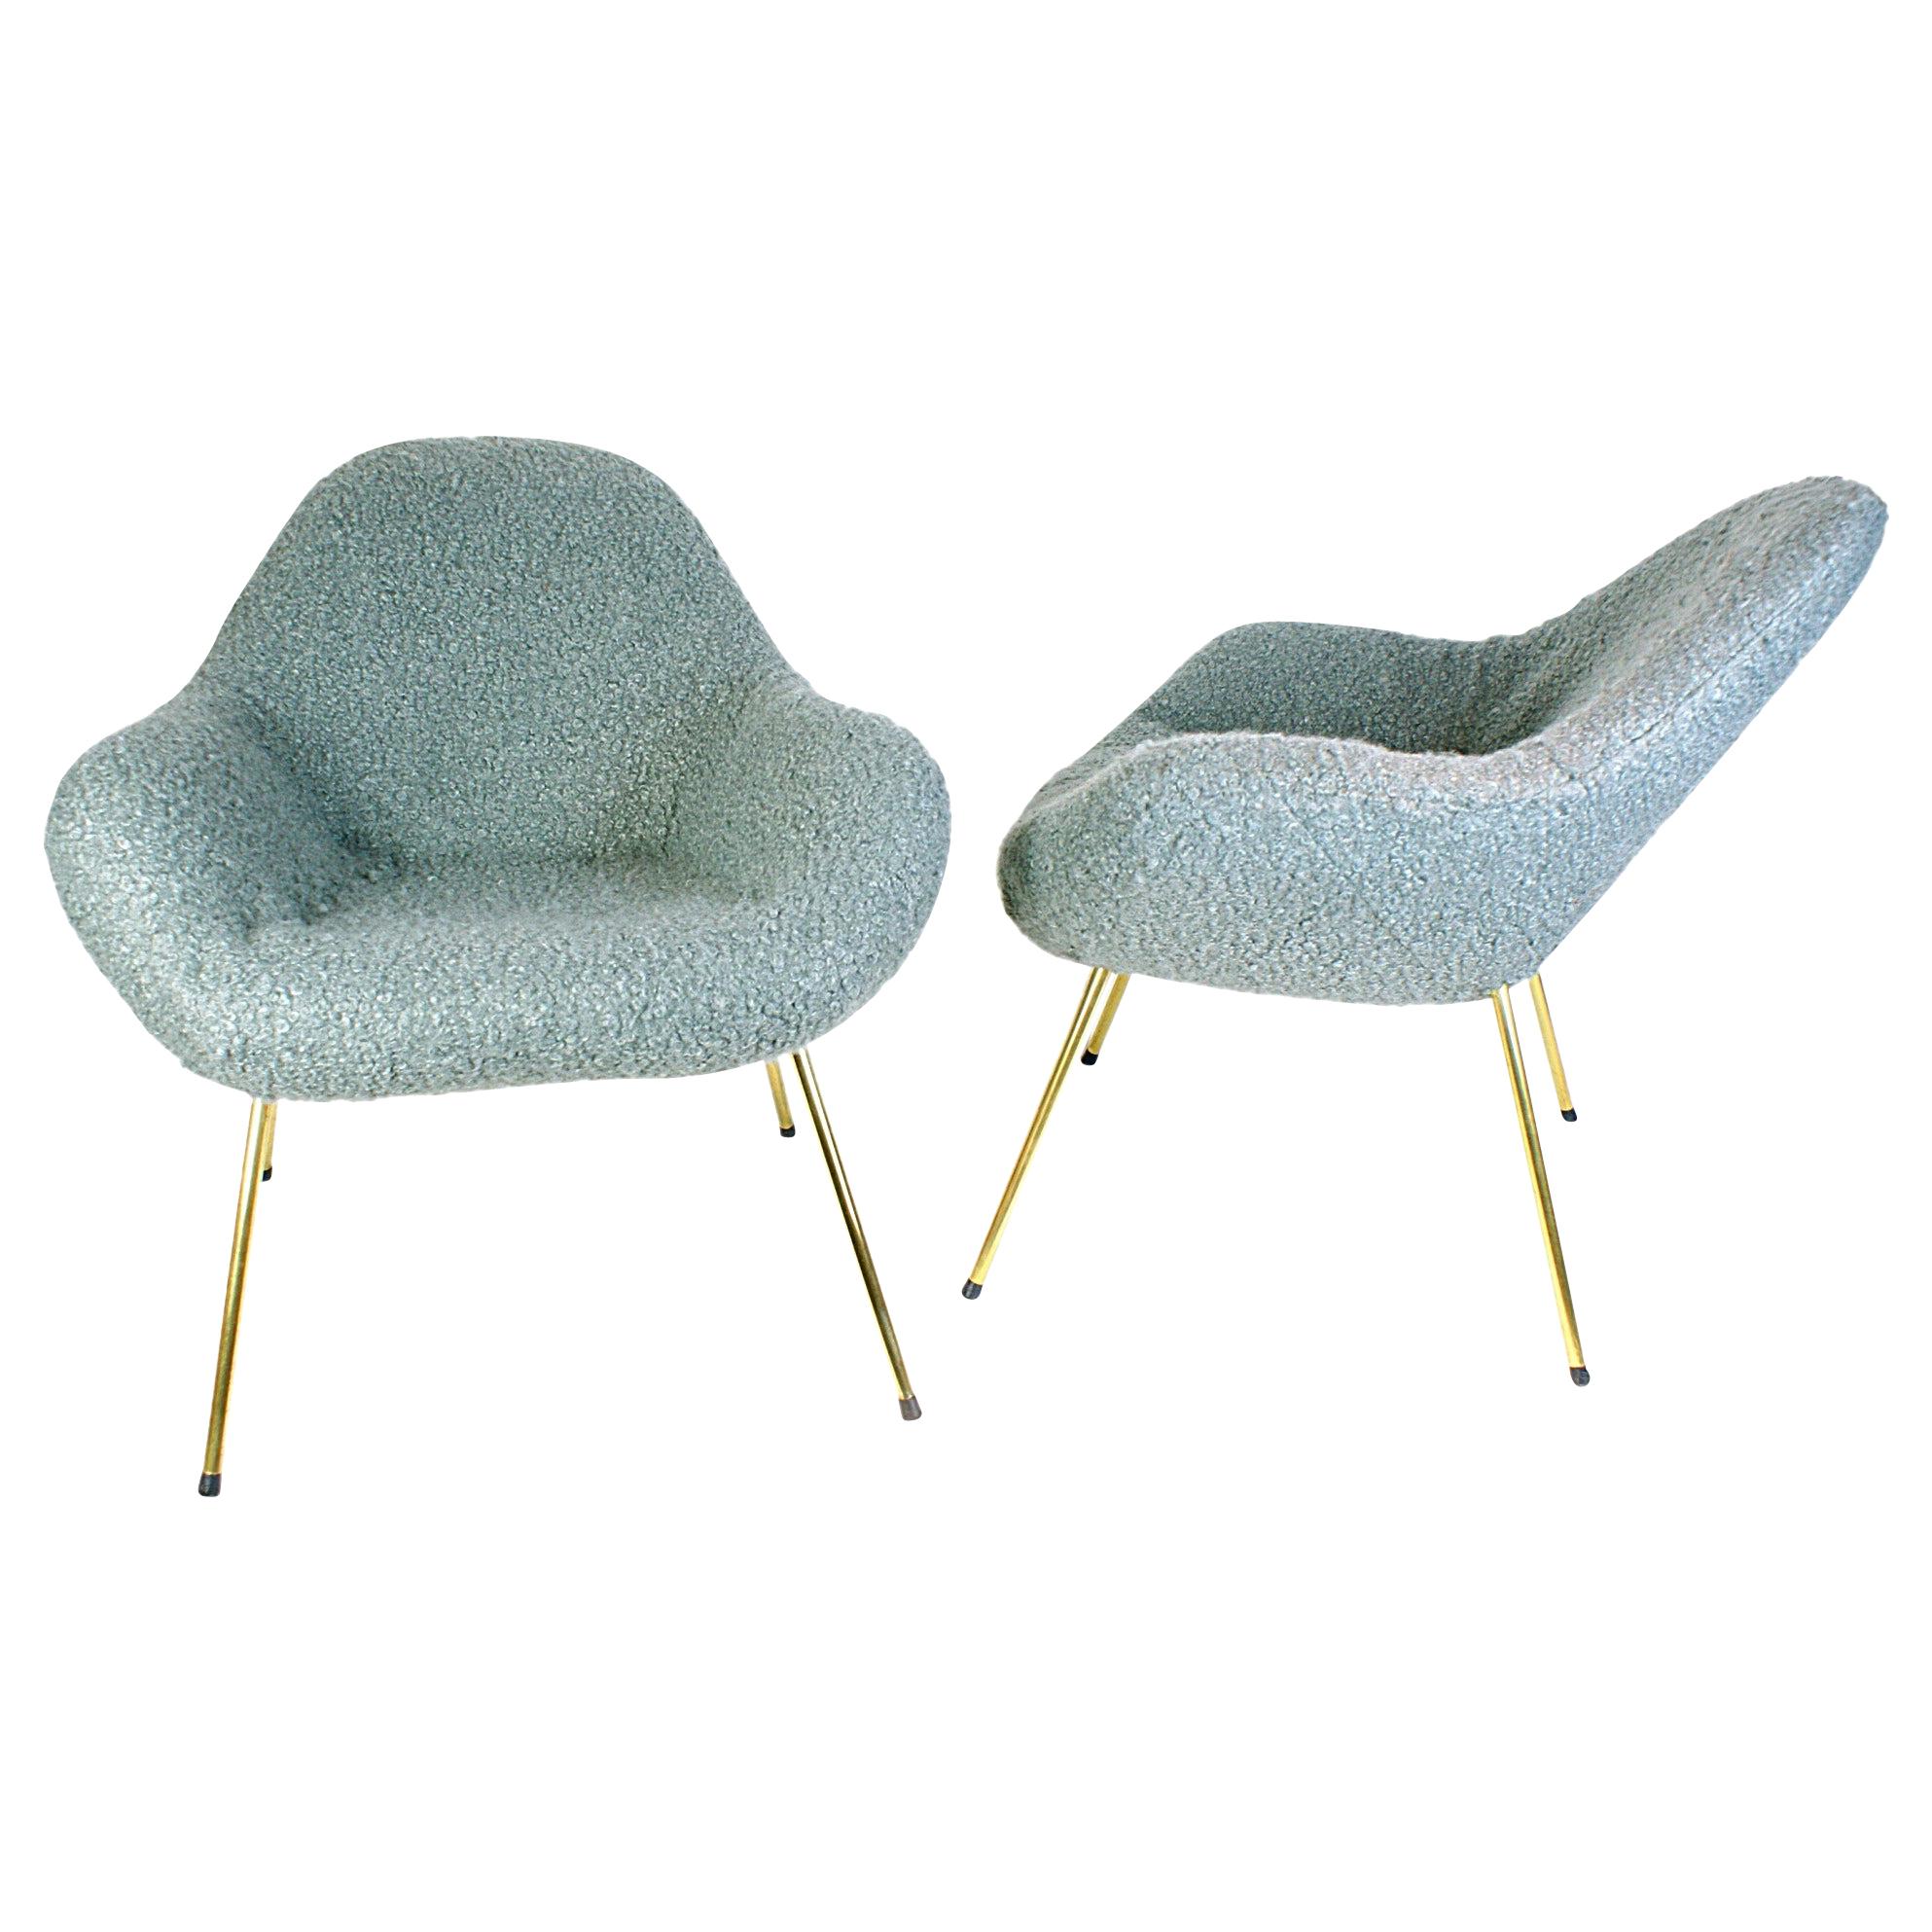 Pair of Midcentury Fritz Neth Sheep Wool Fabrik Lounge Chairs, 1950s, Germany